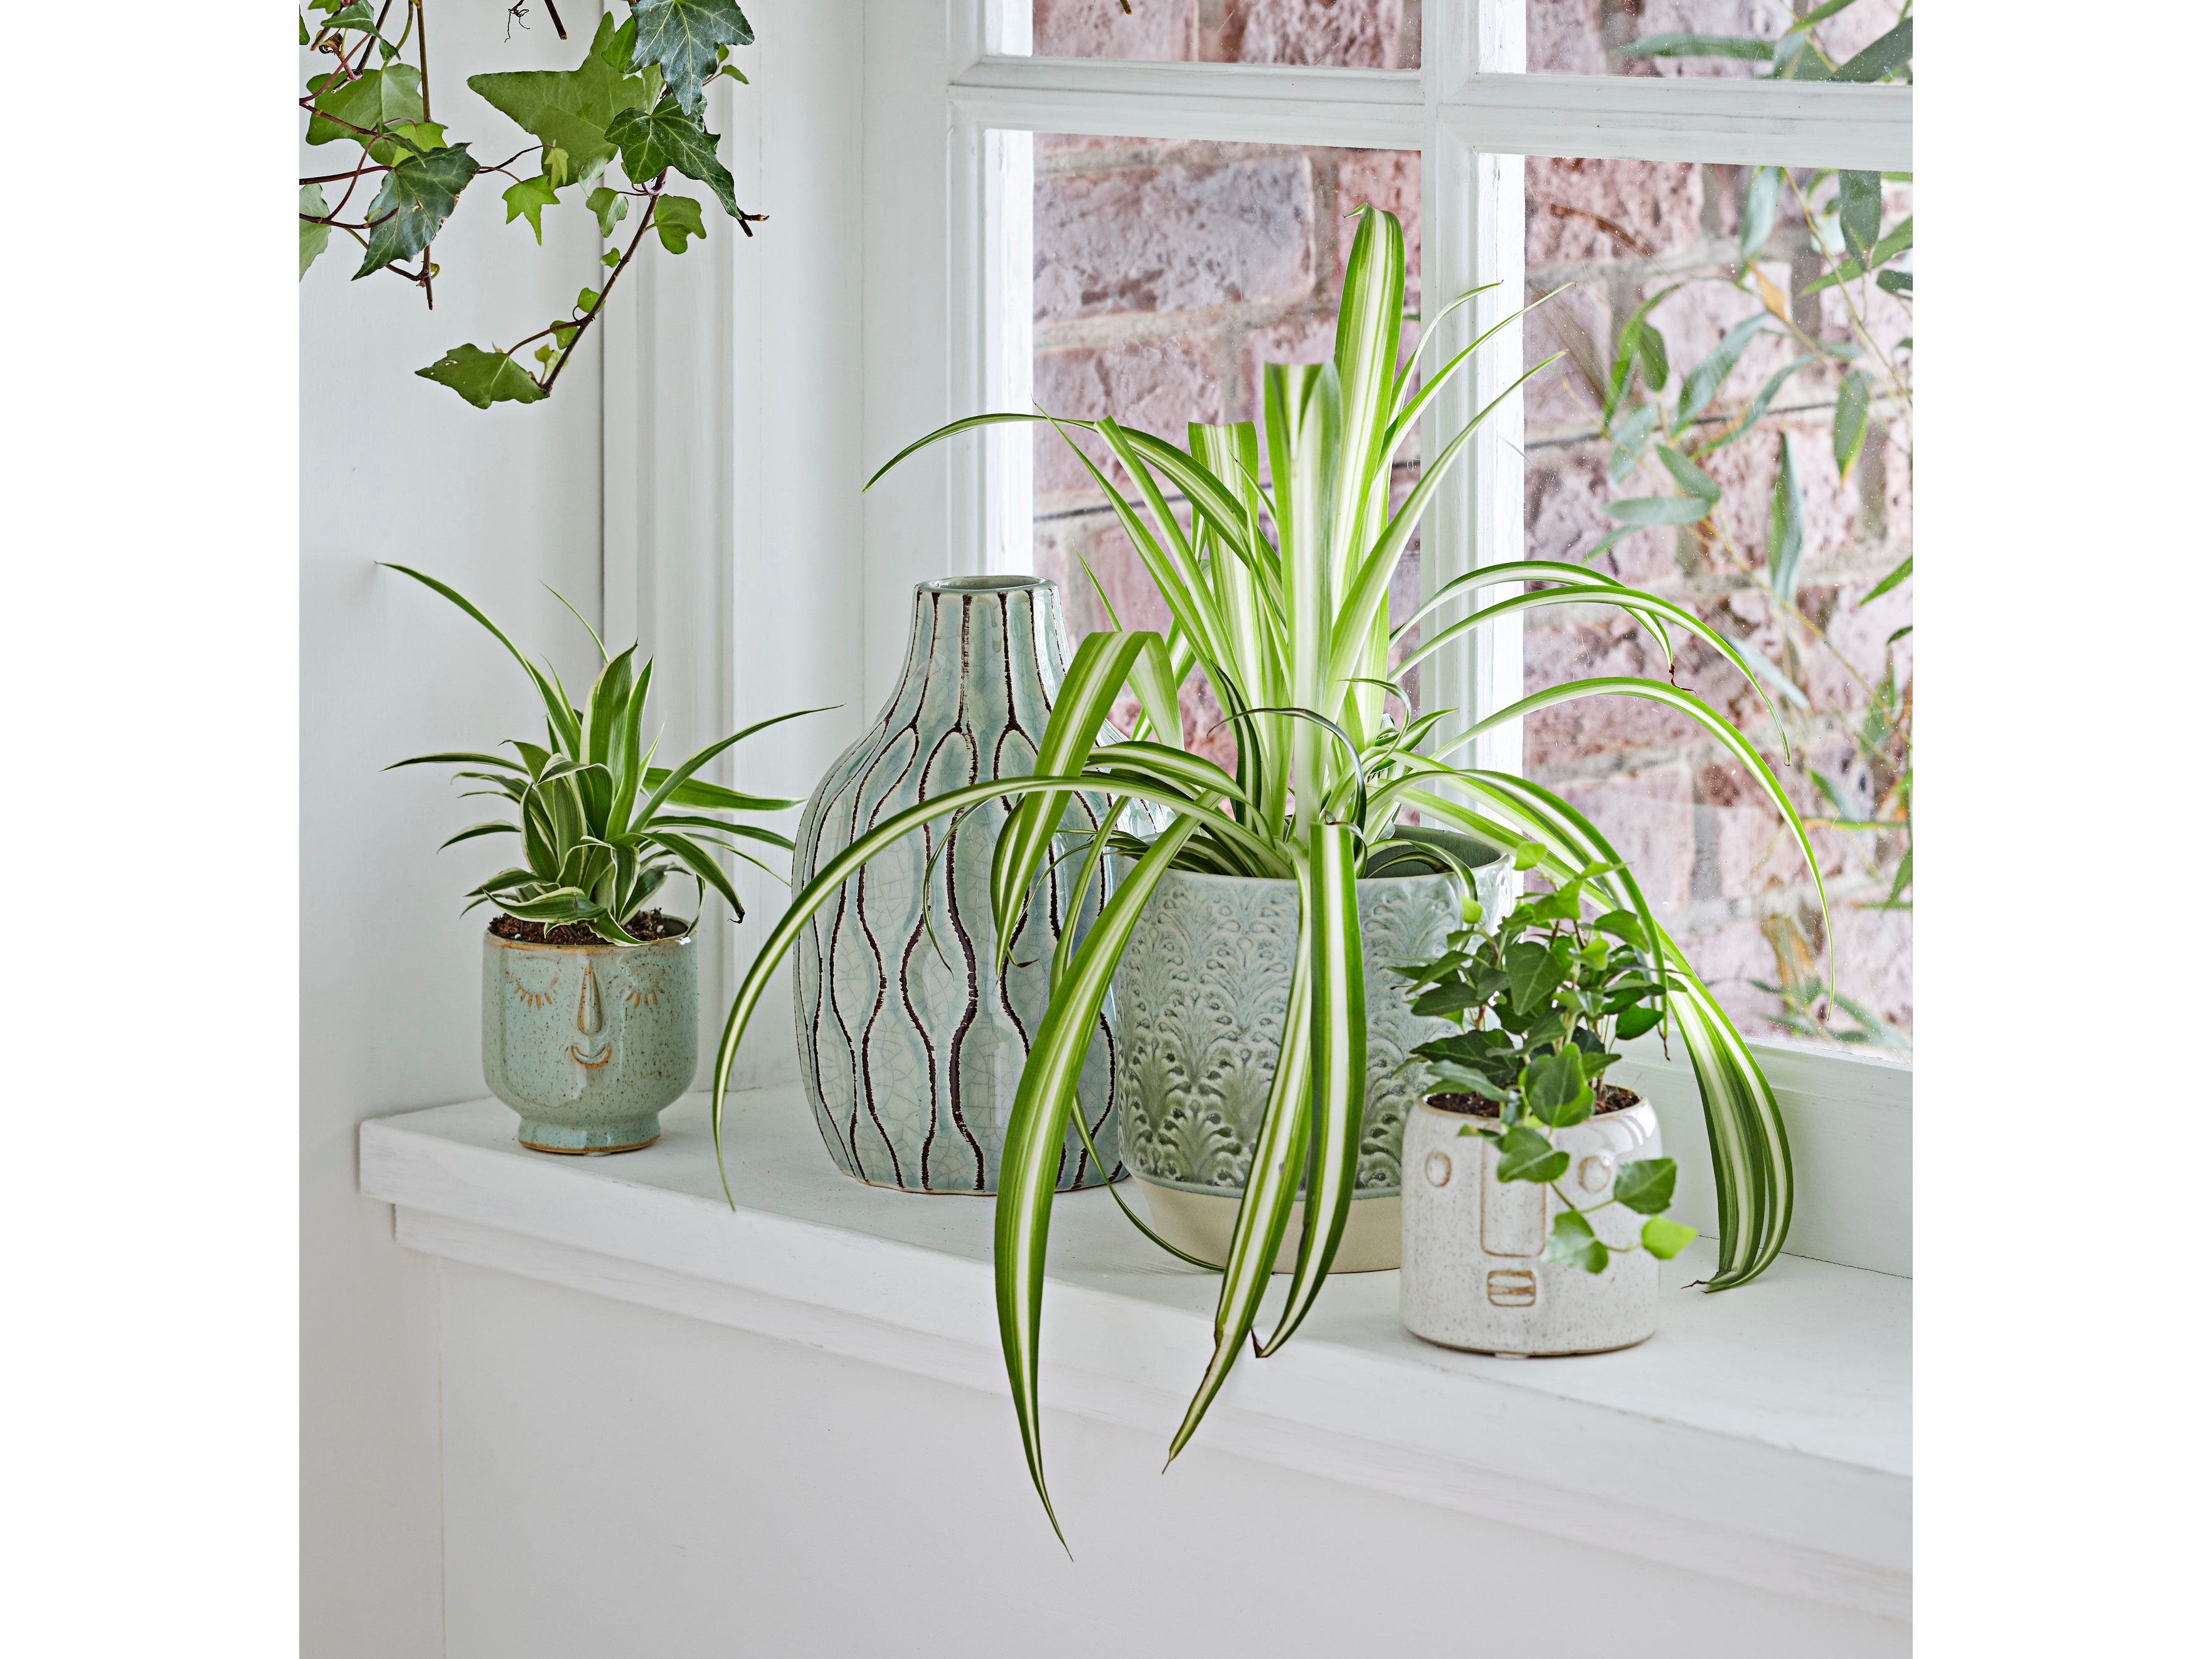 Dobbies houseplants spider plant.jpg